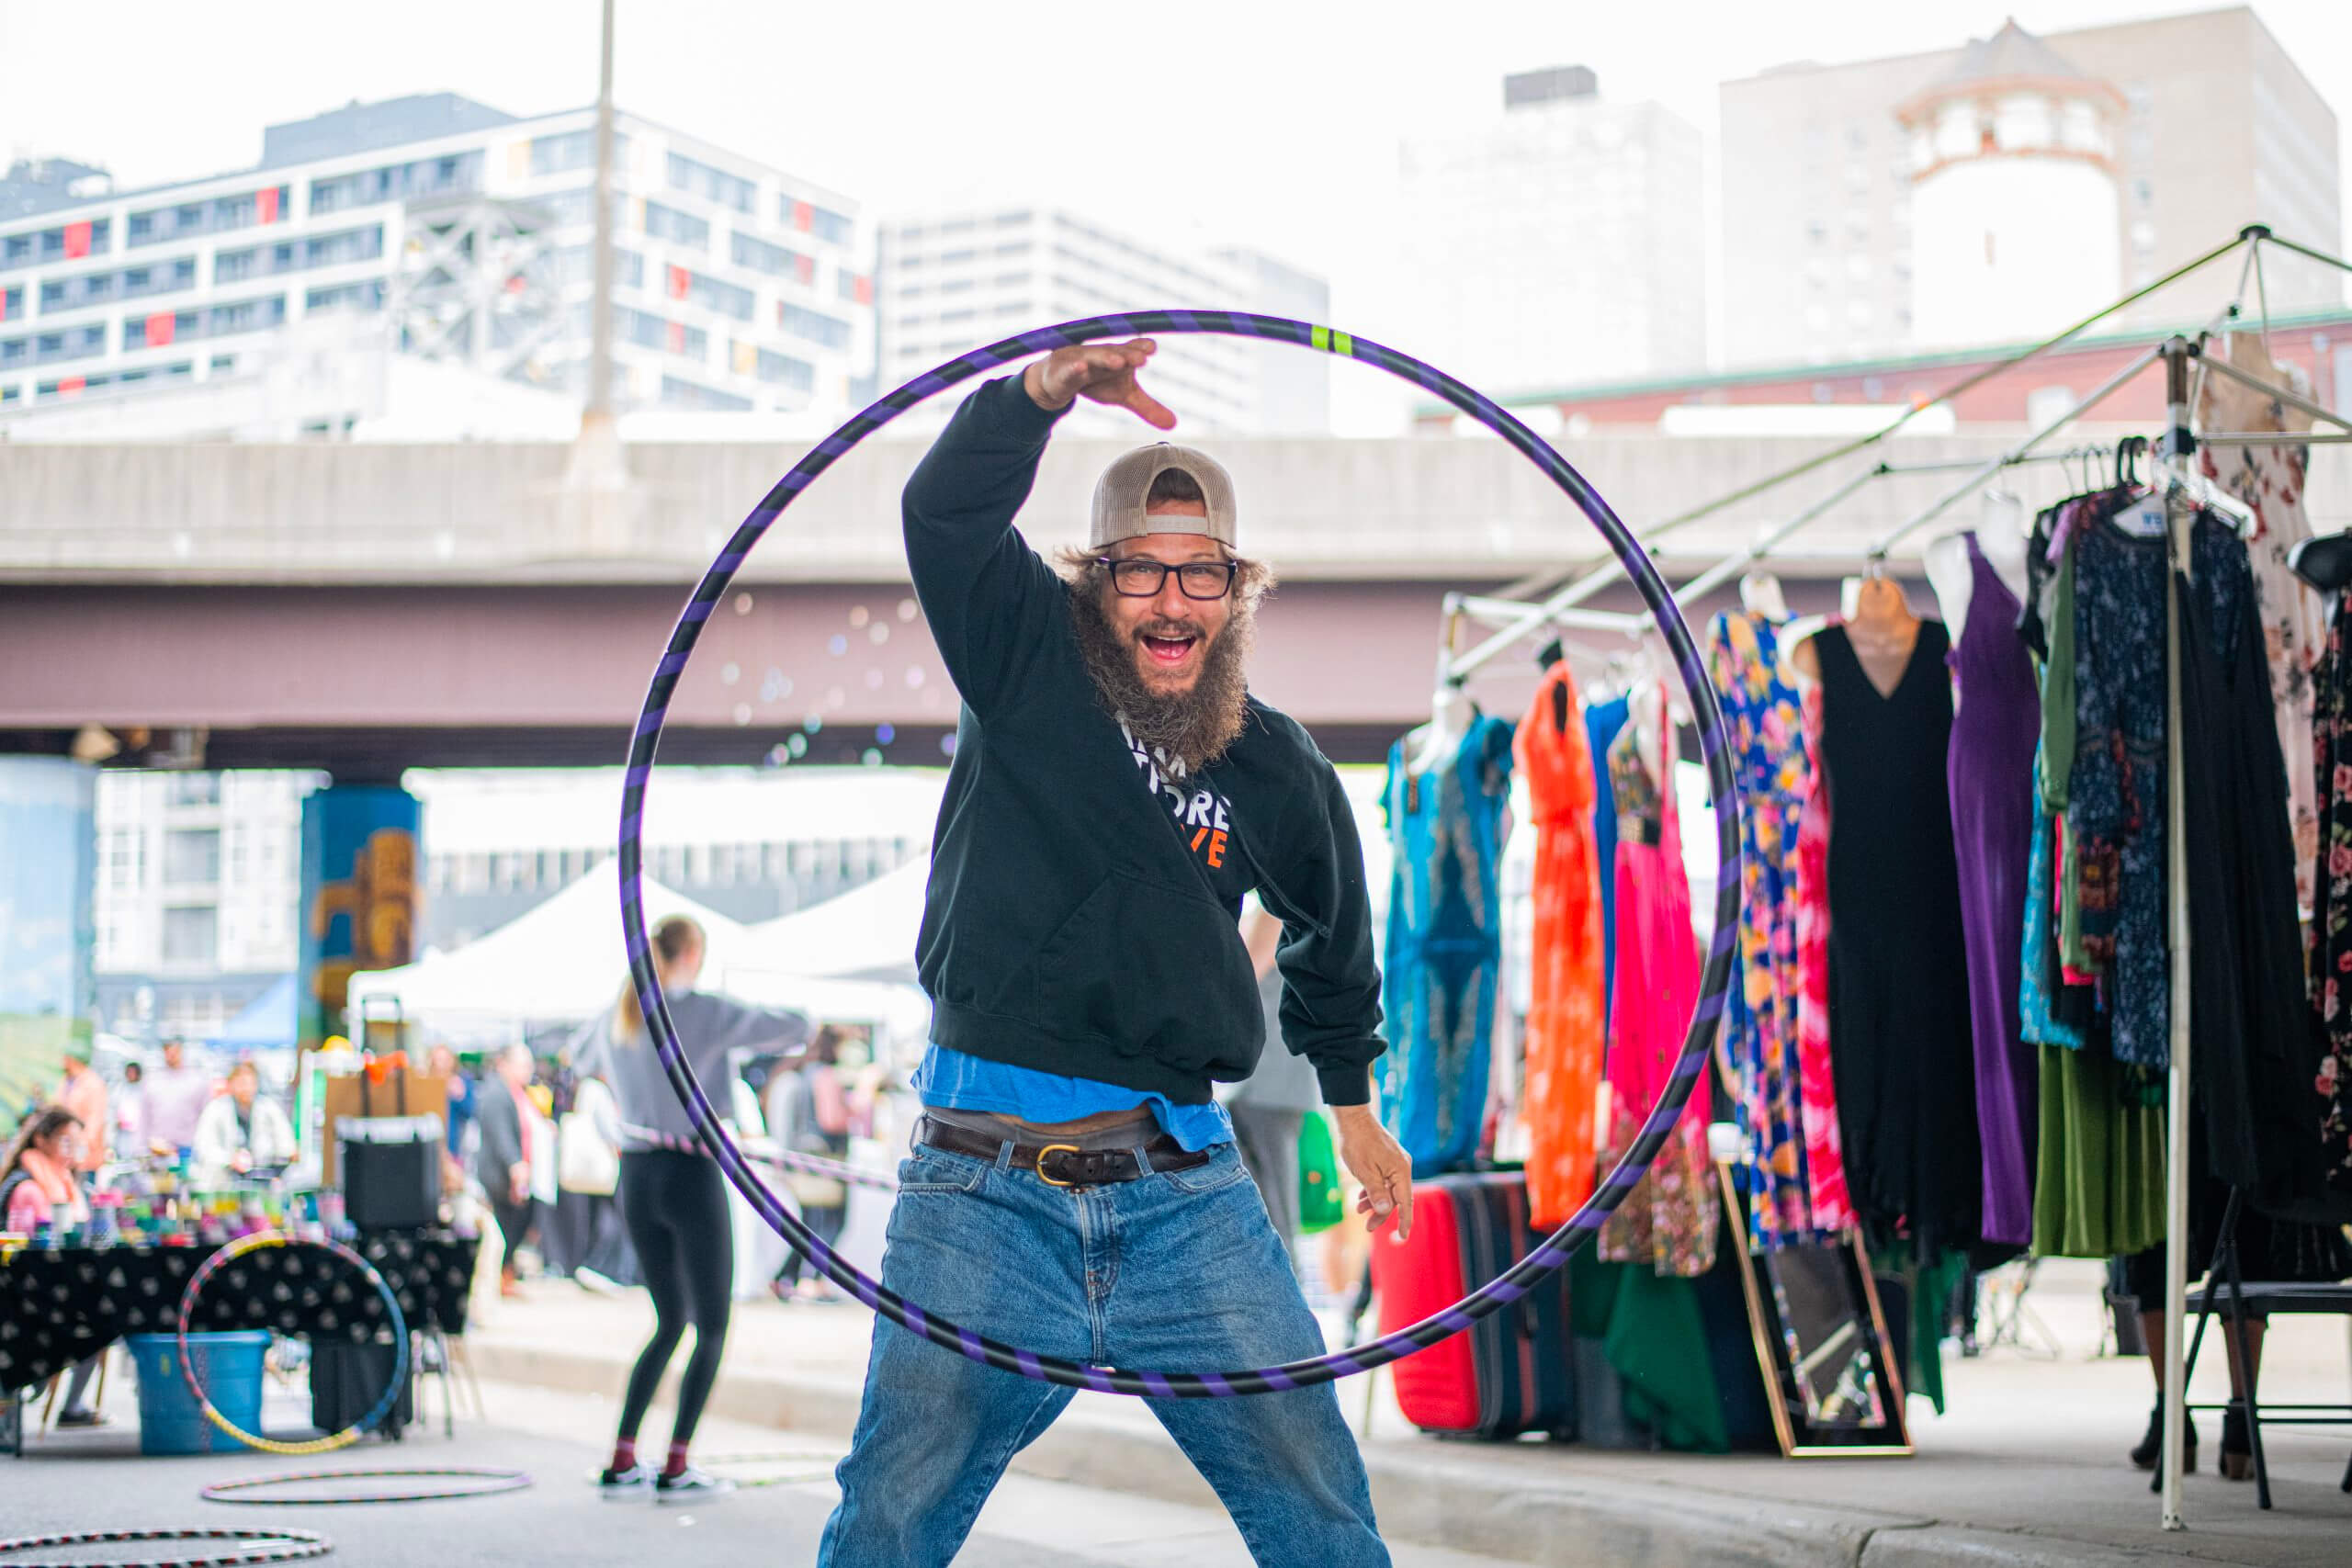 Hula hoop contest